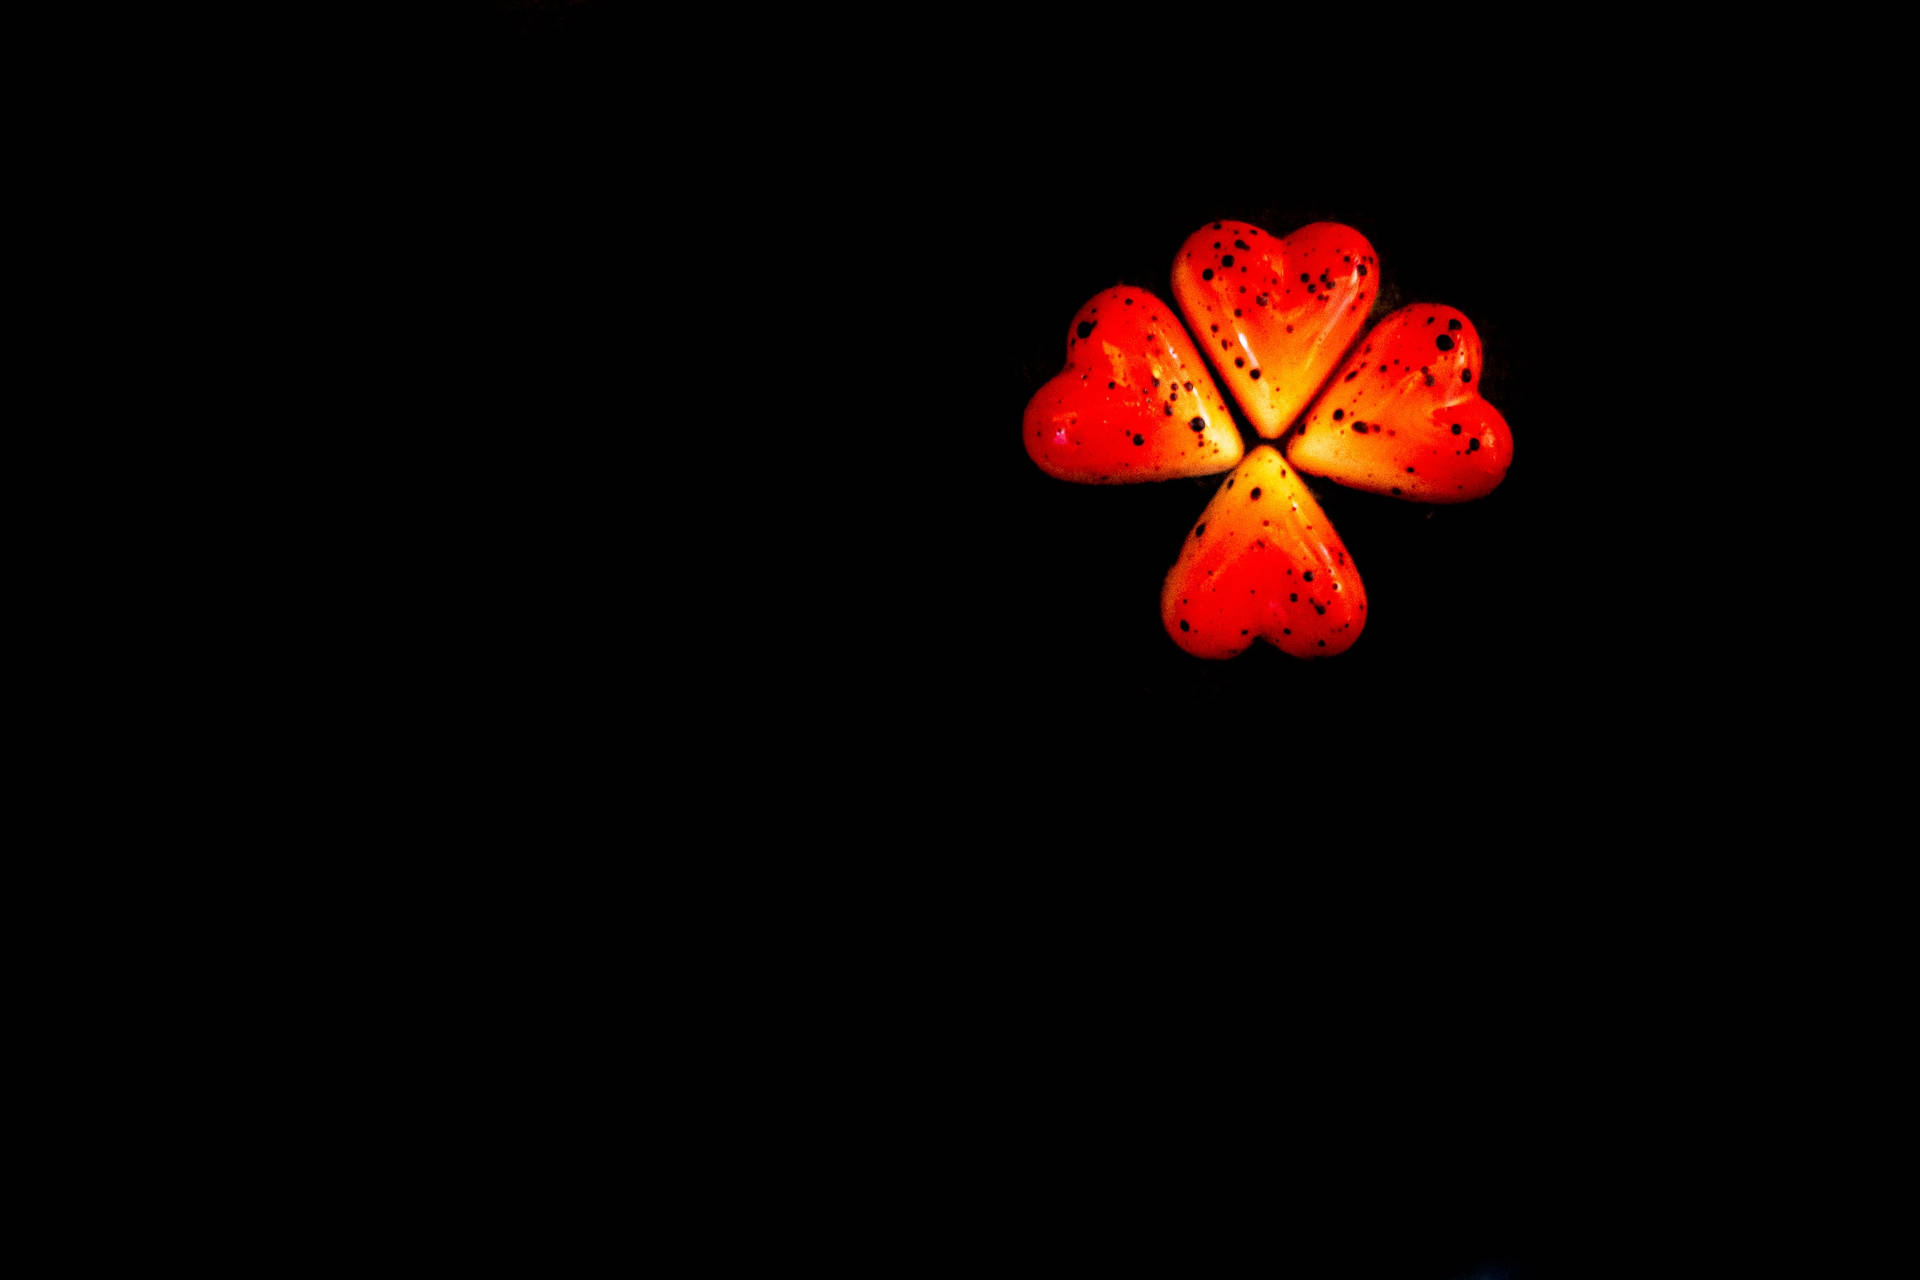 Four Clover Leaf-shaped Dark Heart